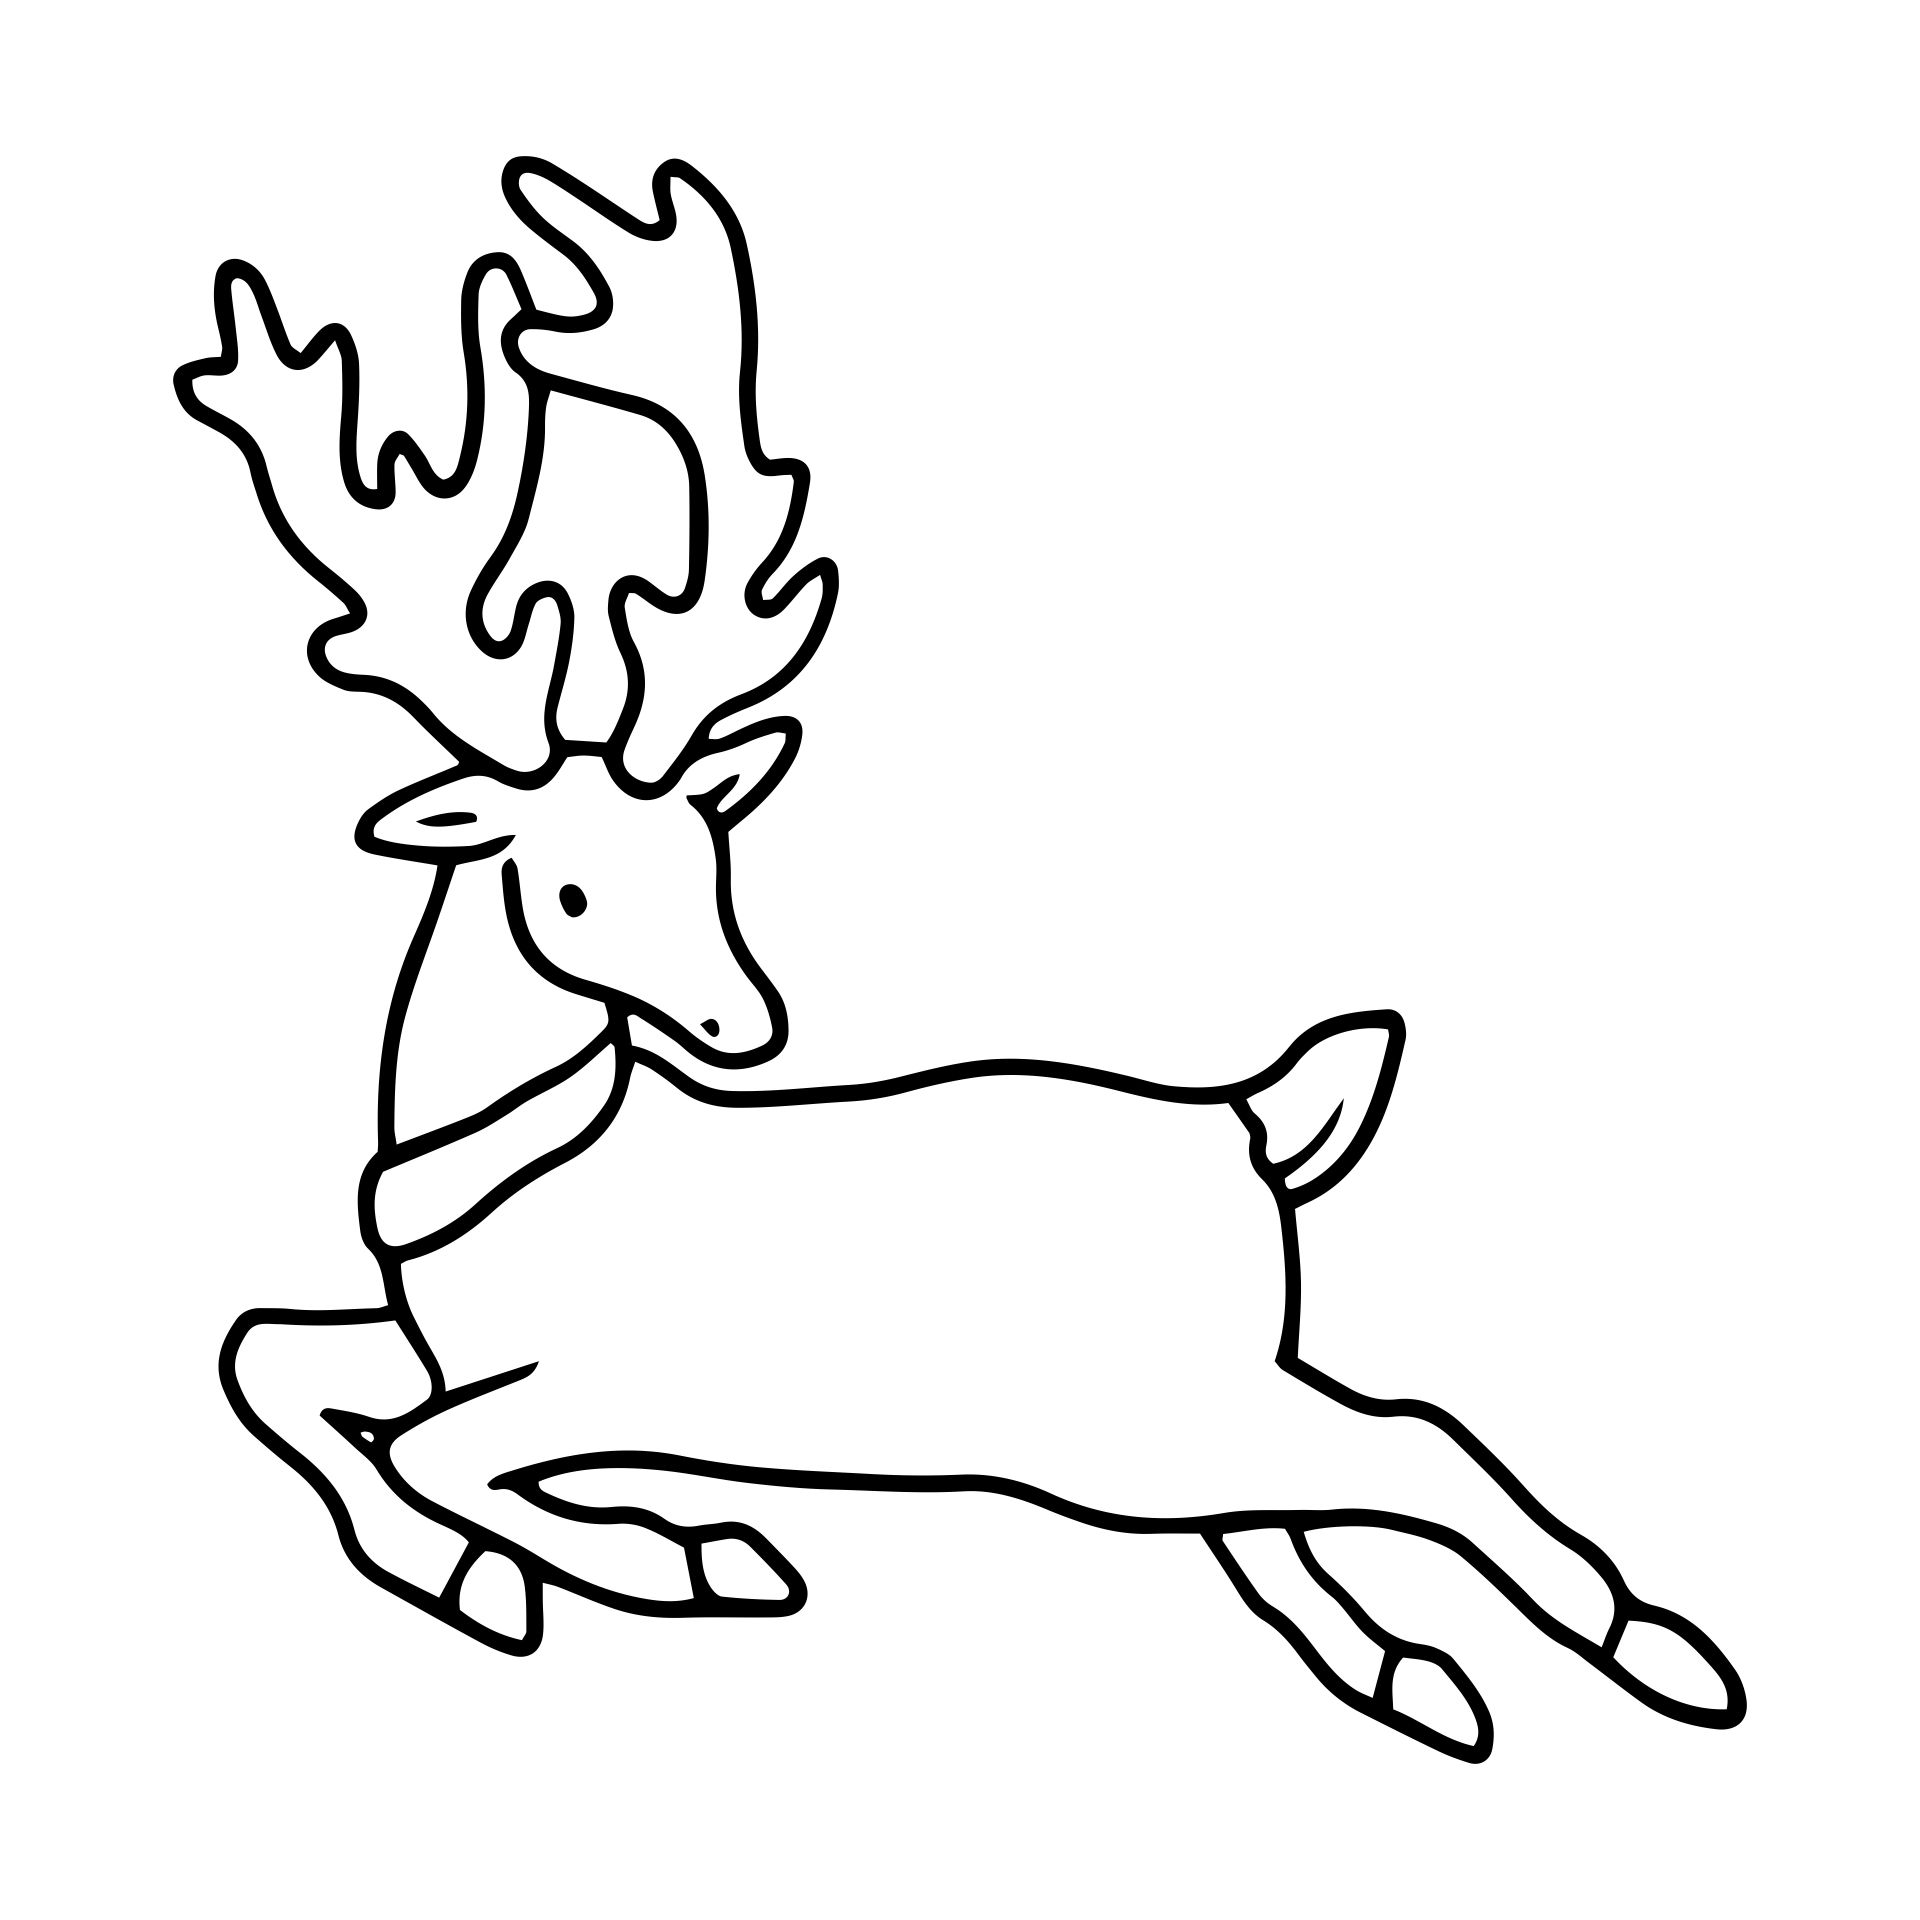 Reindeer Coloring Page Template